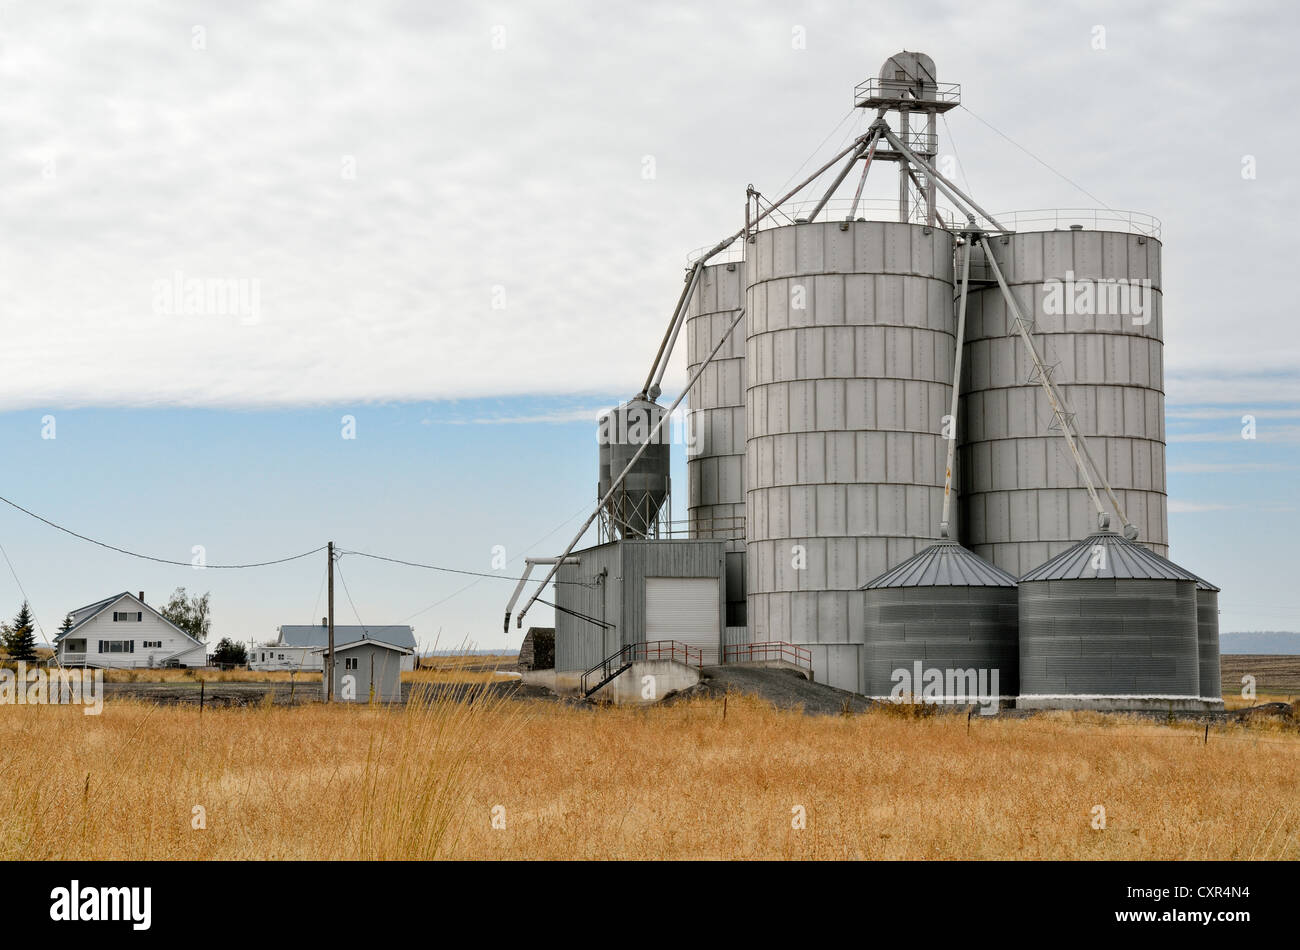 Grain silos, Anatone, Highway 129, Washington, USA Stock Photo